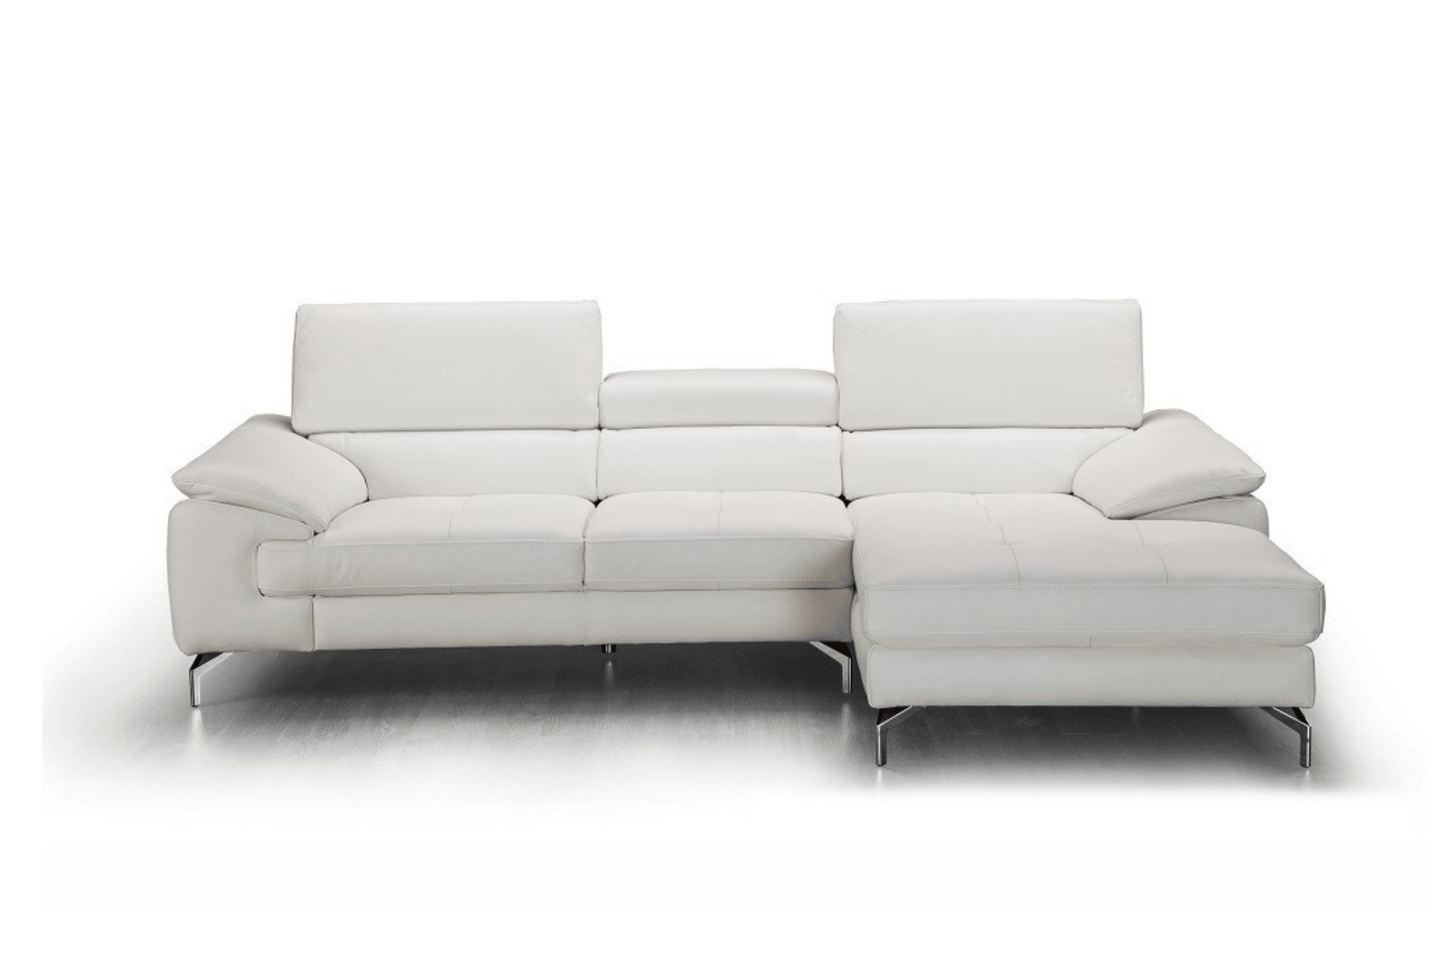 Alice Premium Leather Sectional - Venini Furniture 